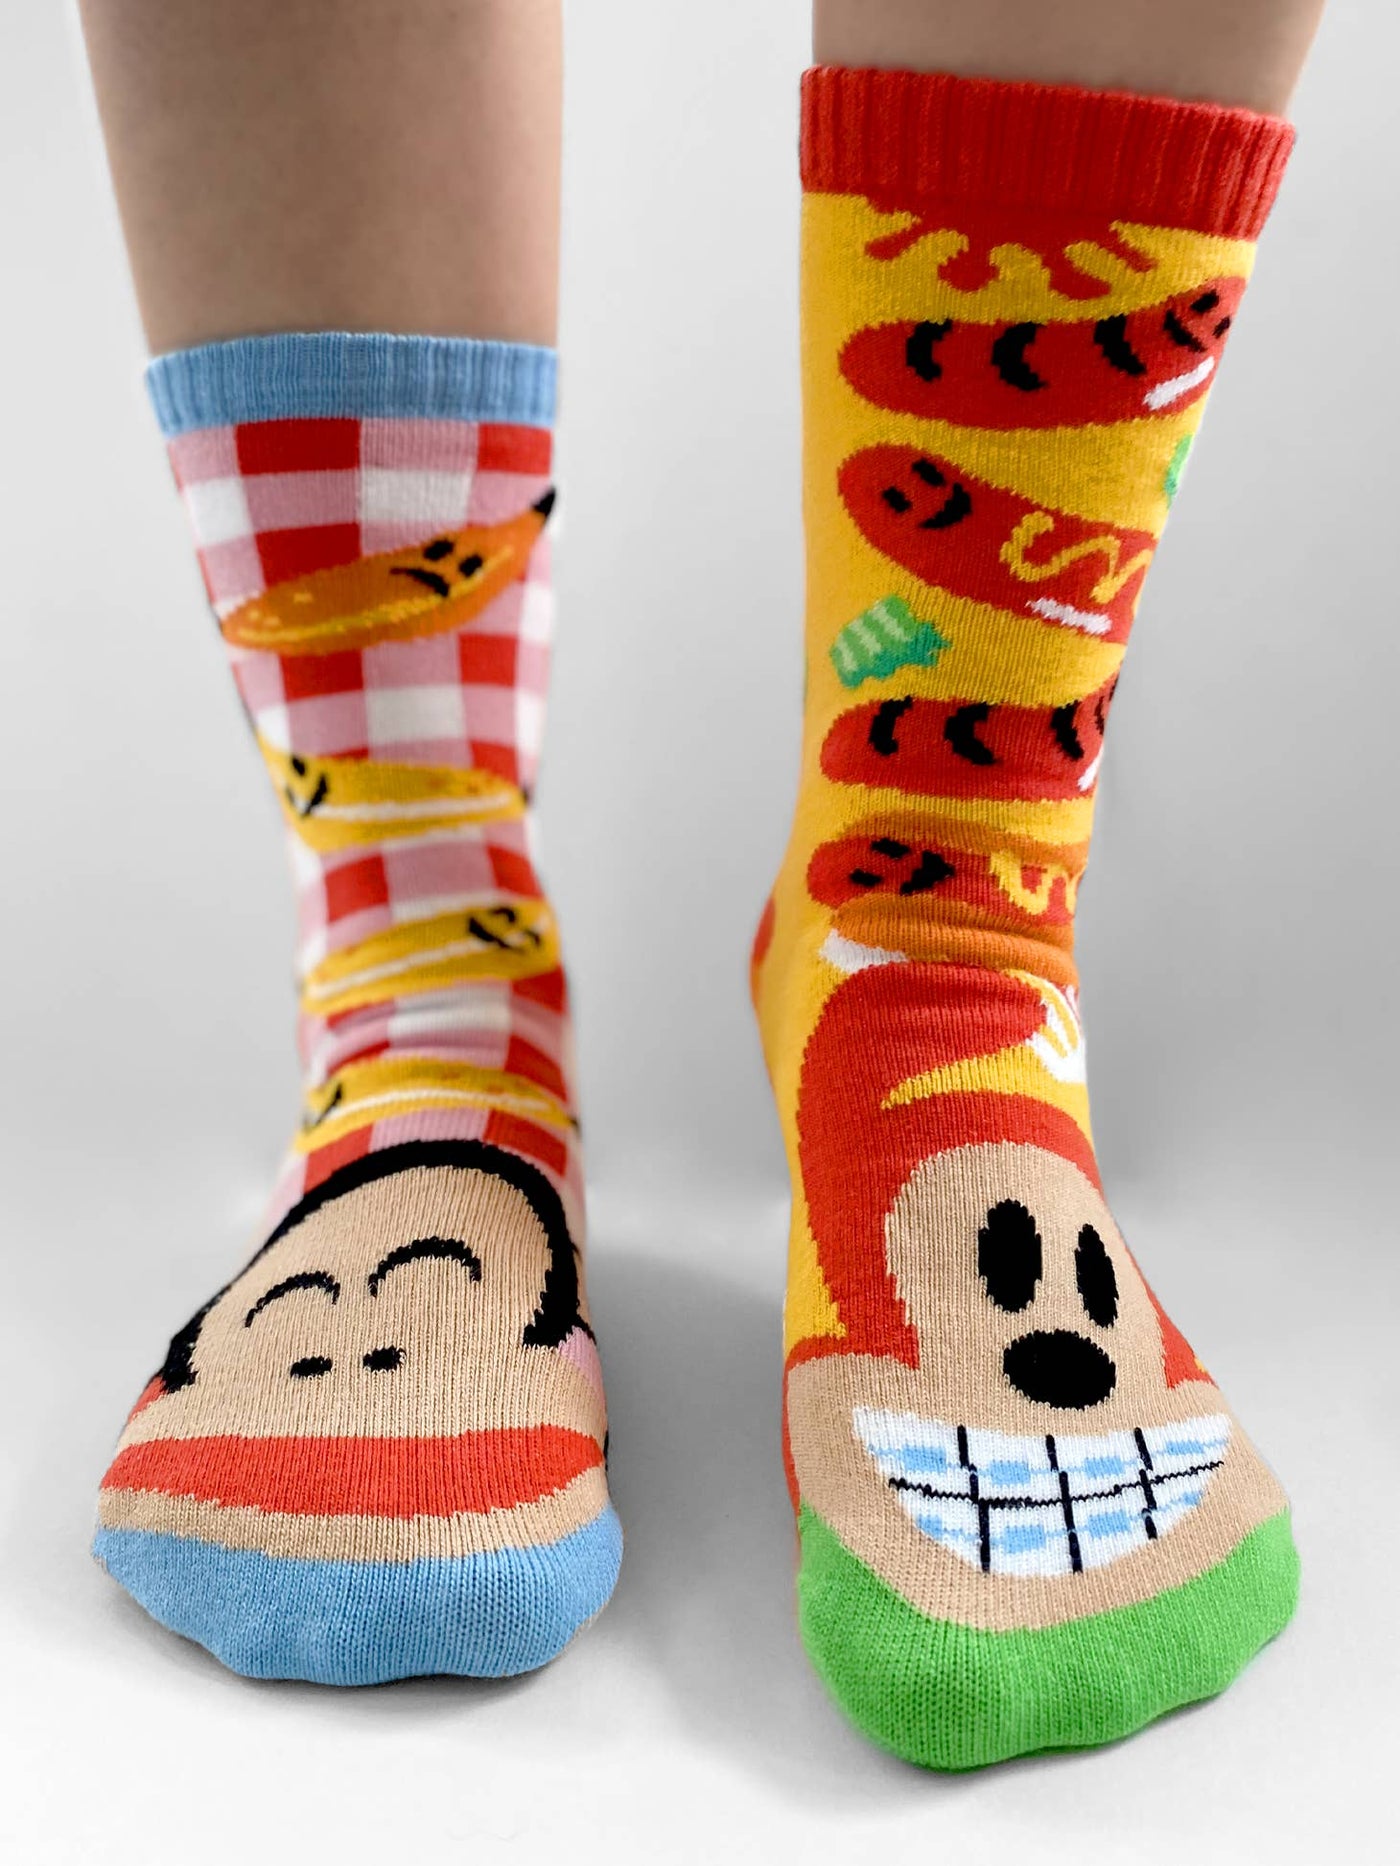 Julius & Bob Mismatched Adult Socks (Limited Edition)